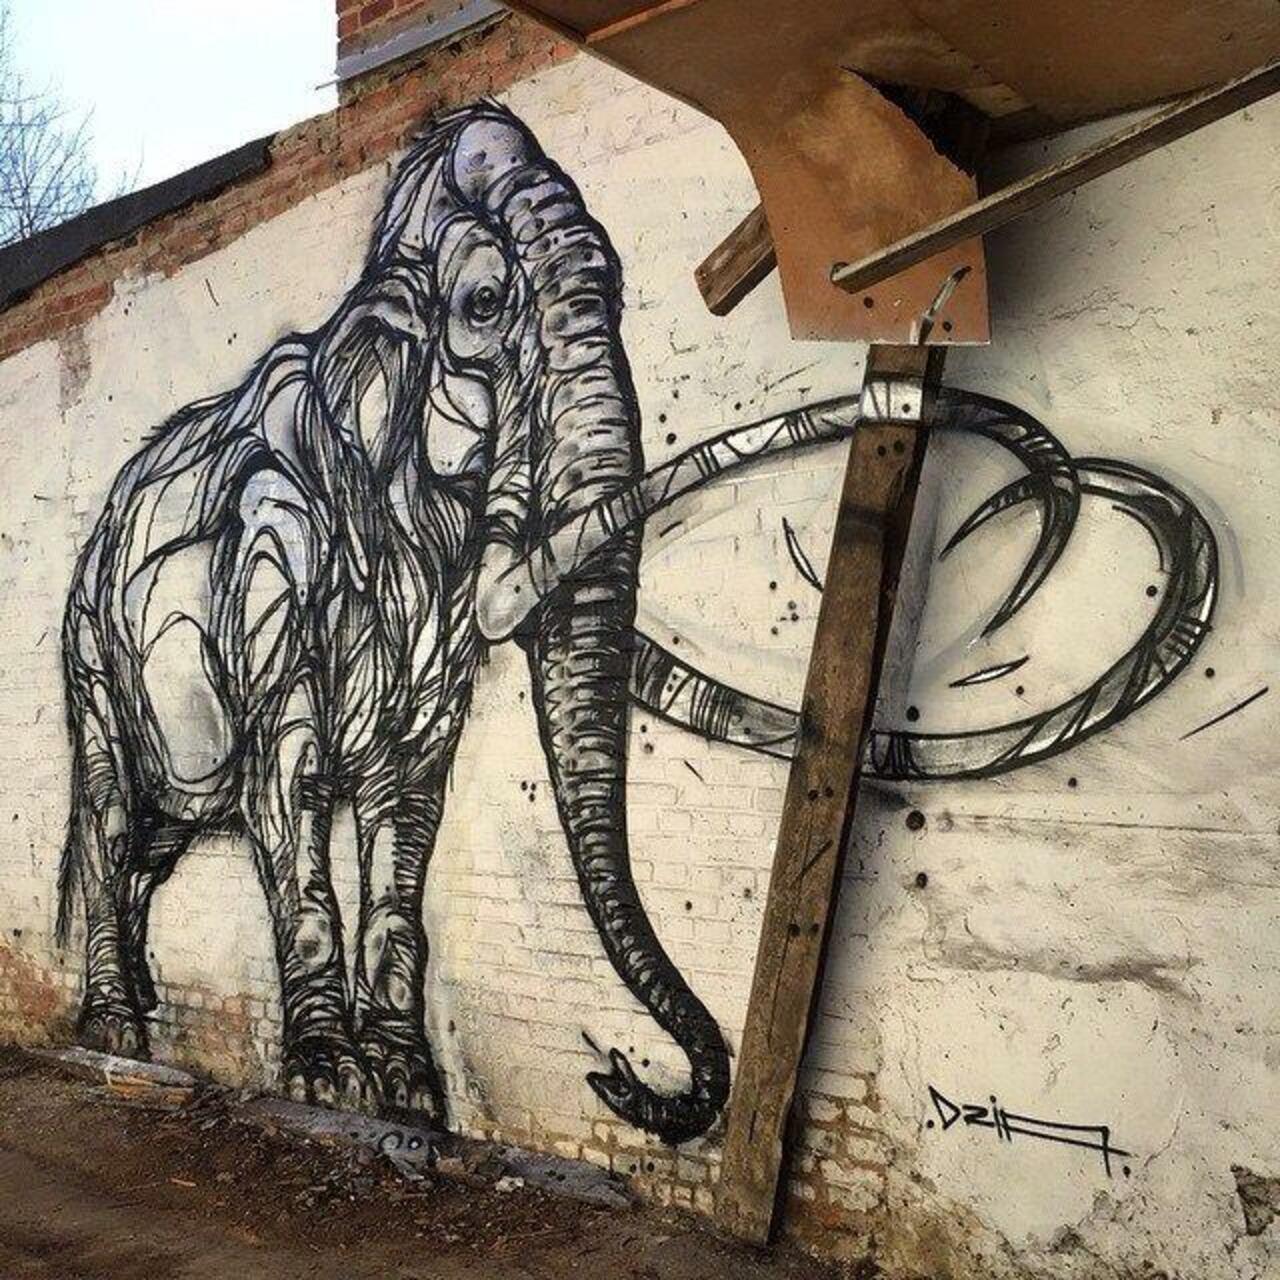 Mammoth. New nature in Street Art wall by DZIA 

#art #graffiti #mural #streetart http://t.co/Yv8IhhenCO